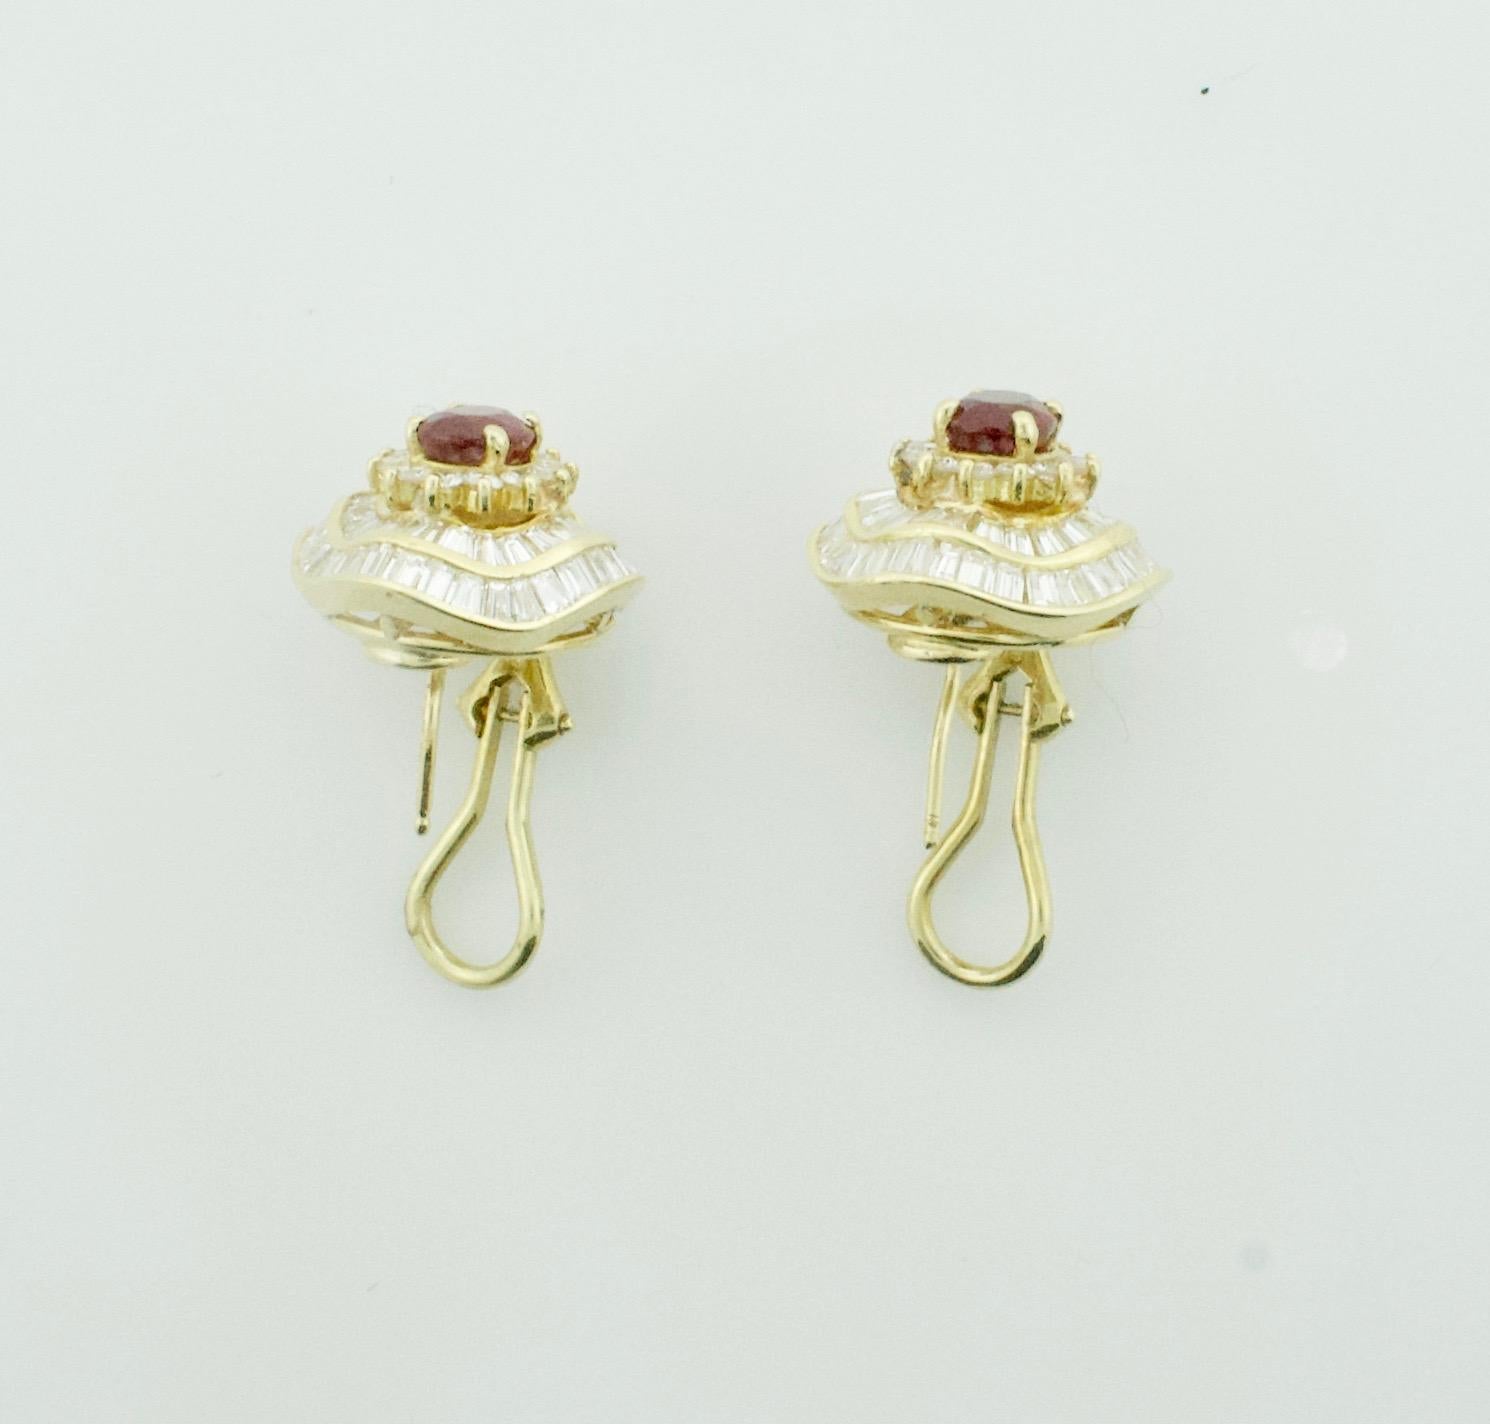 Oval Cut Modern Ruby and Diamond Earrings in 18k Yellow Gold